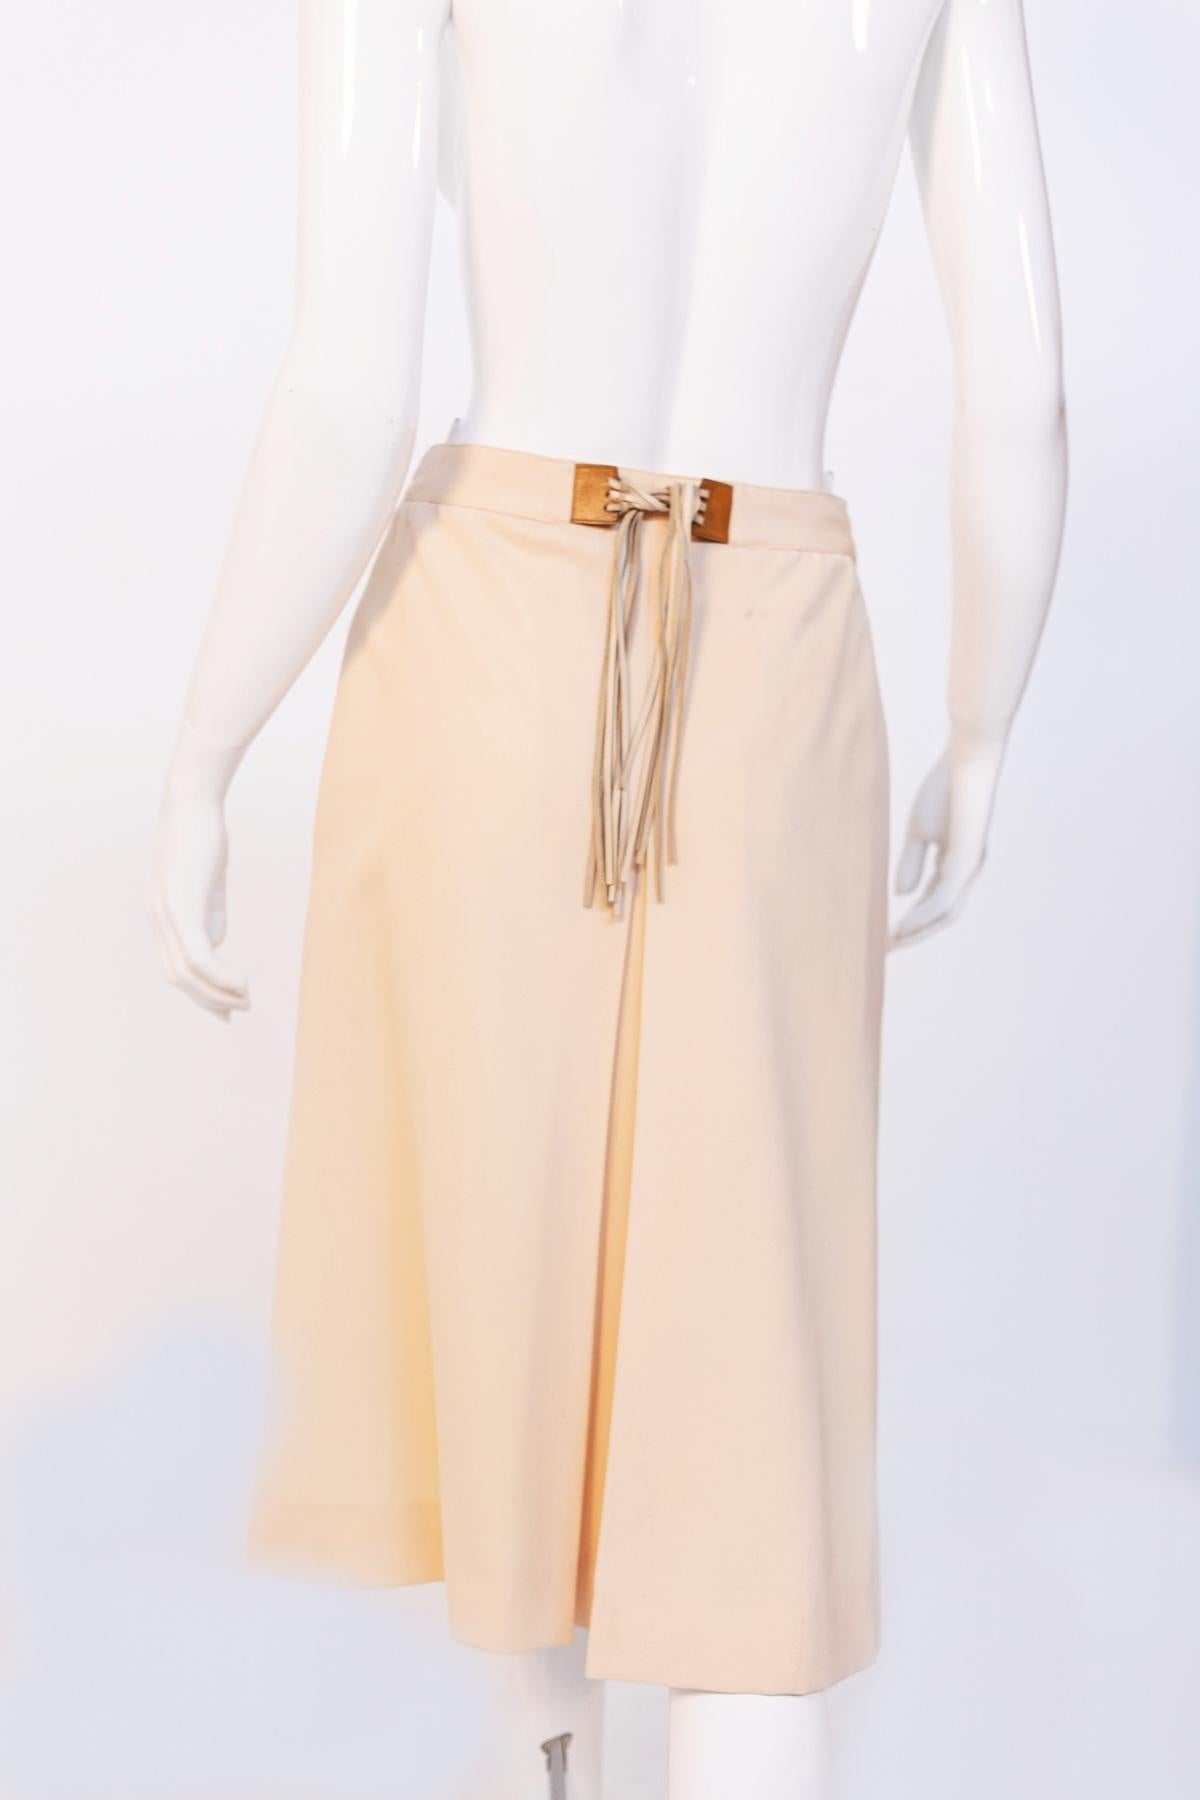 Vintage Skirt with Leather Belt For Sale 1